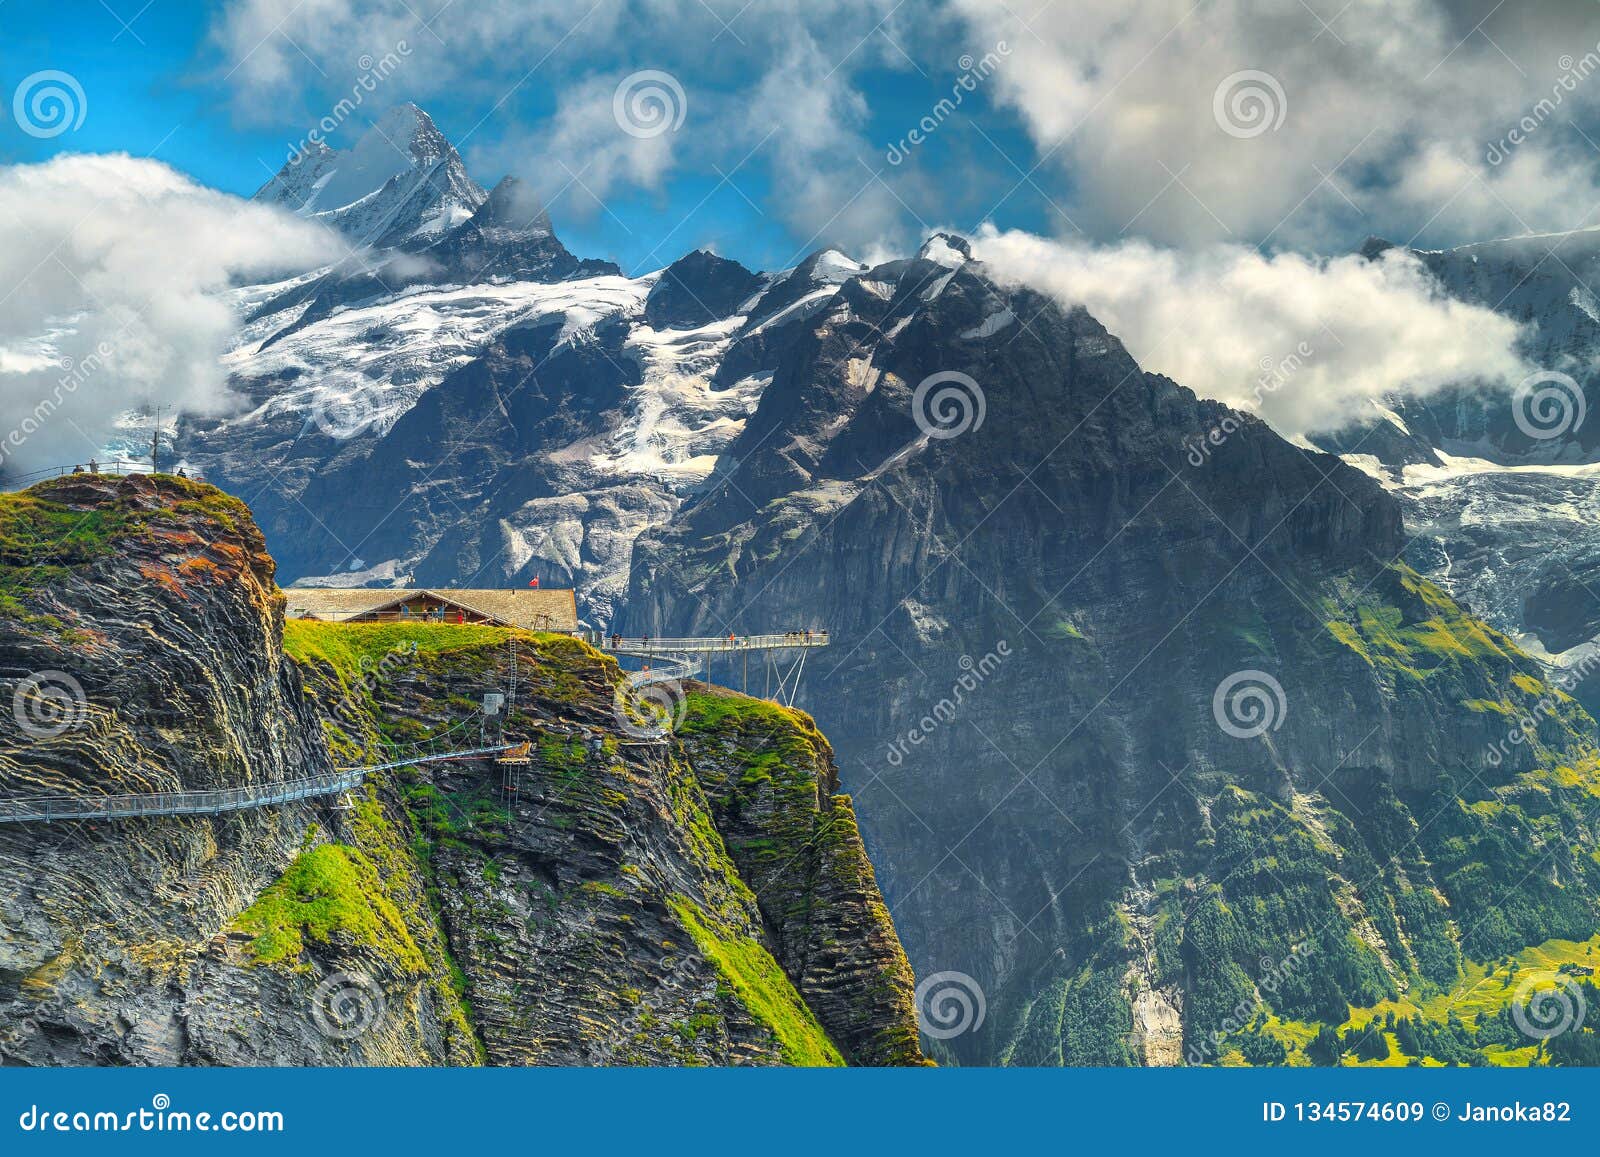 Amazing Panorama And First Mountain Station Grindelwald Switzerland